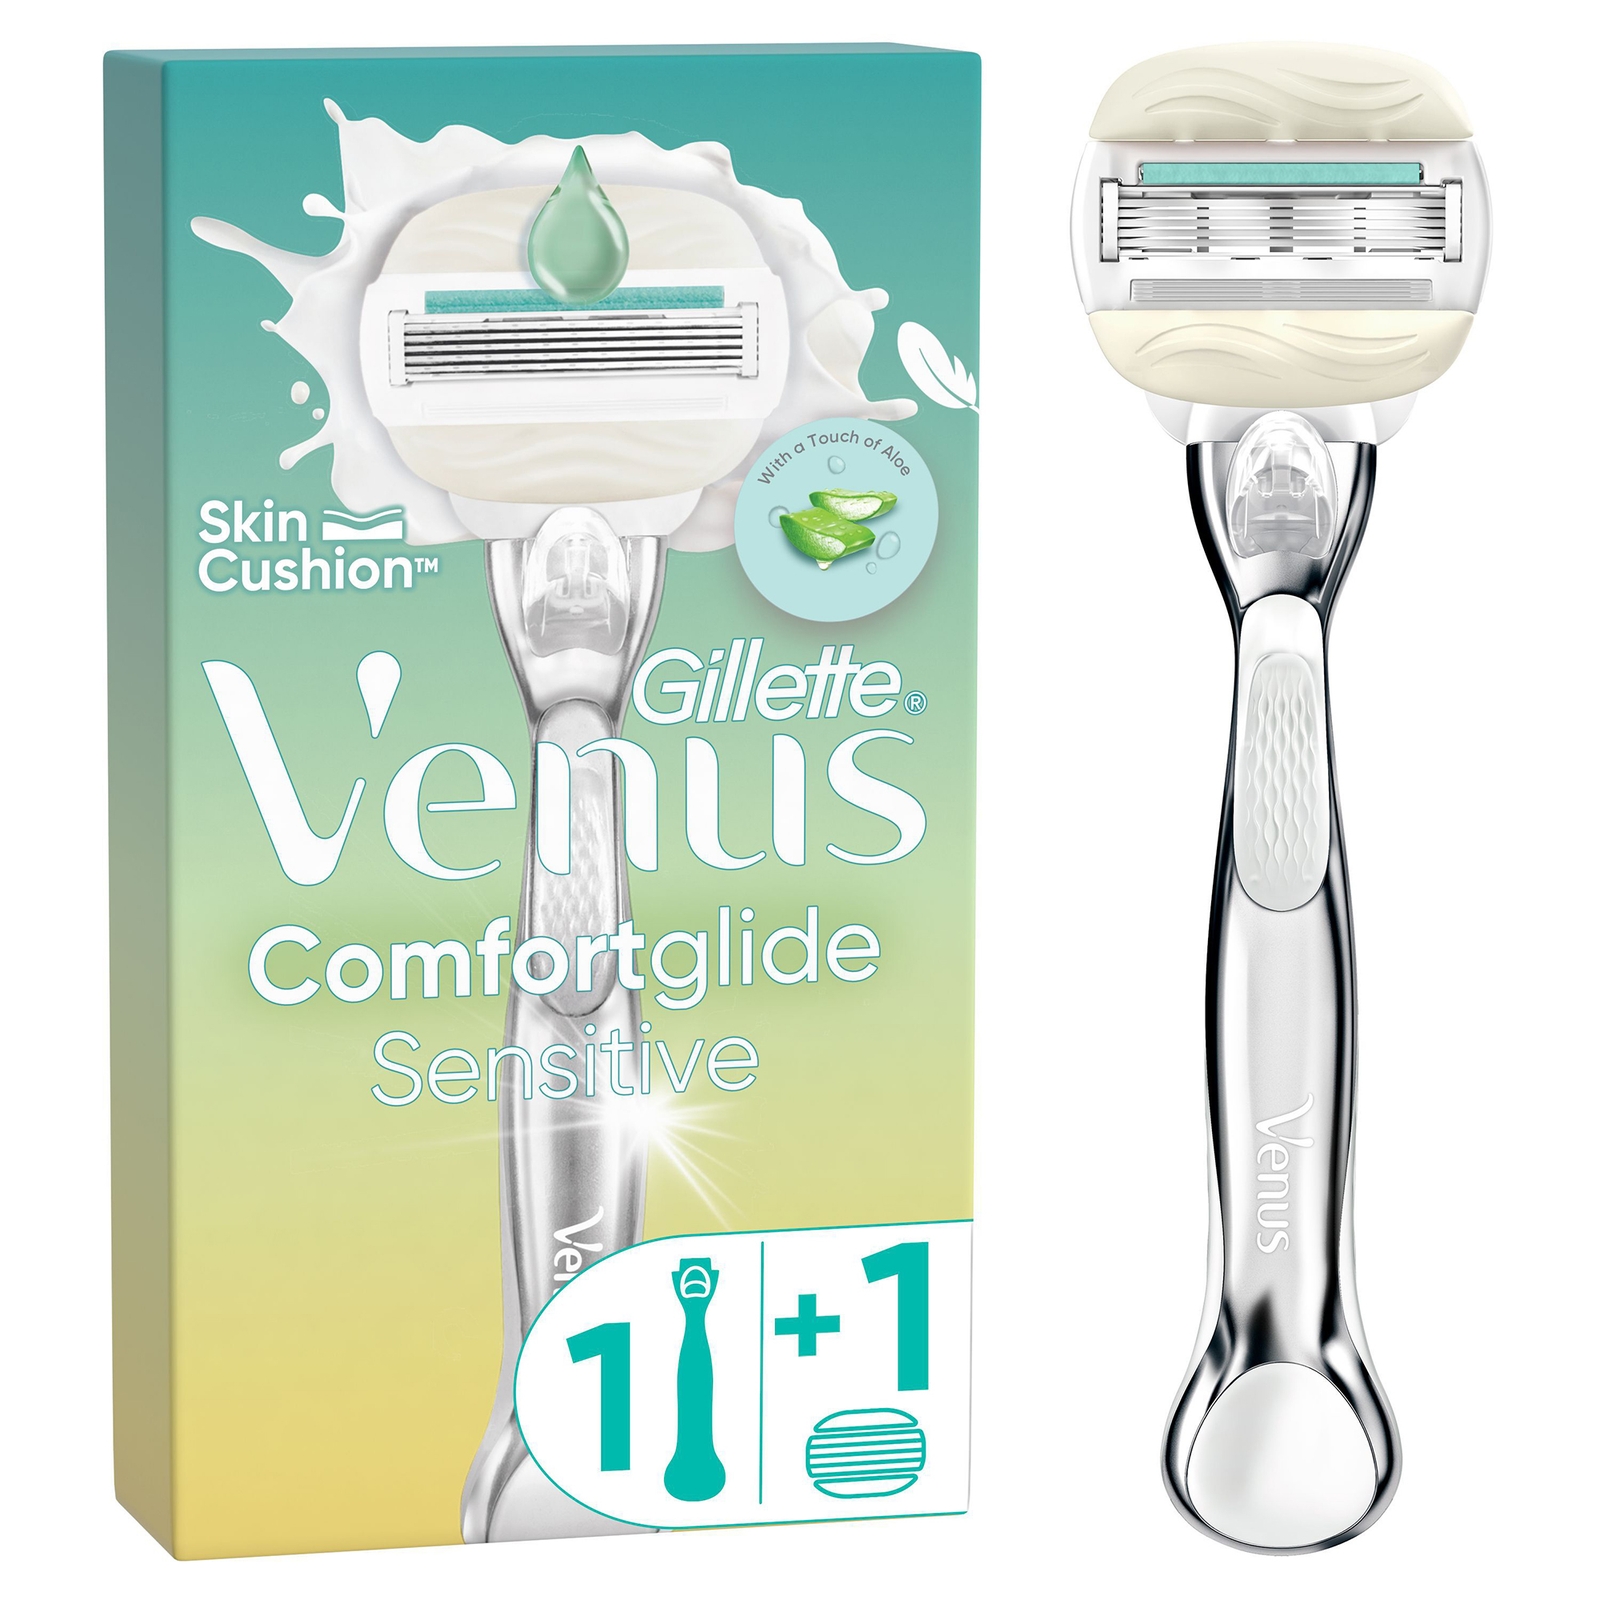 Venus ComfortGlide Sensitive Razor with Aloe Vera